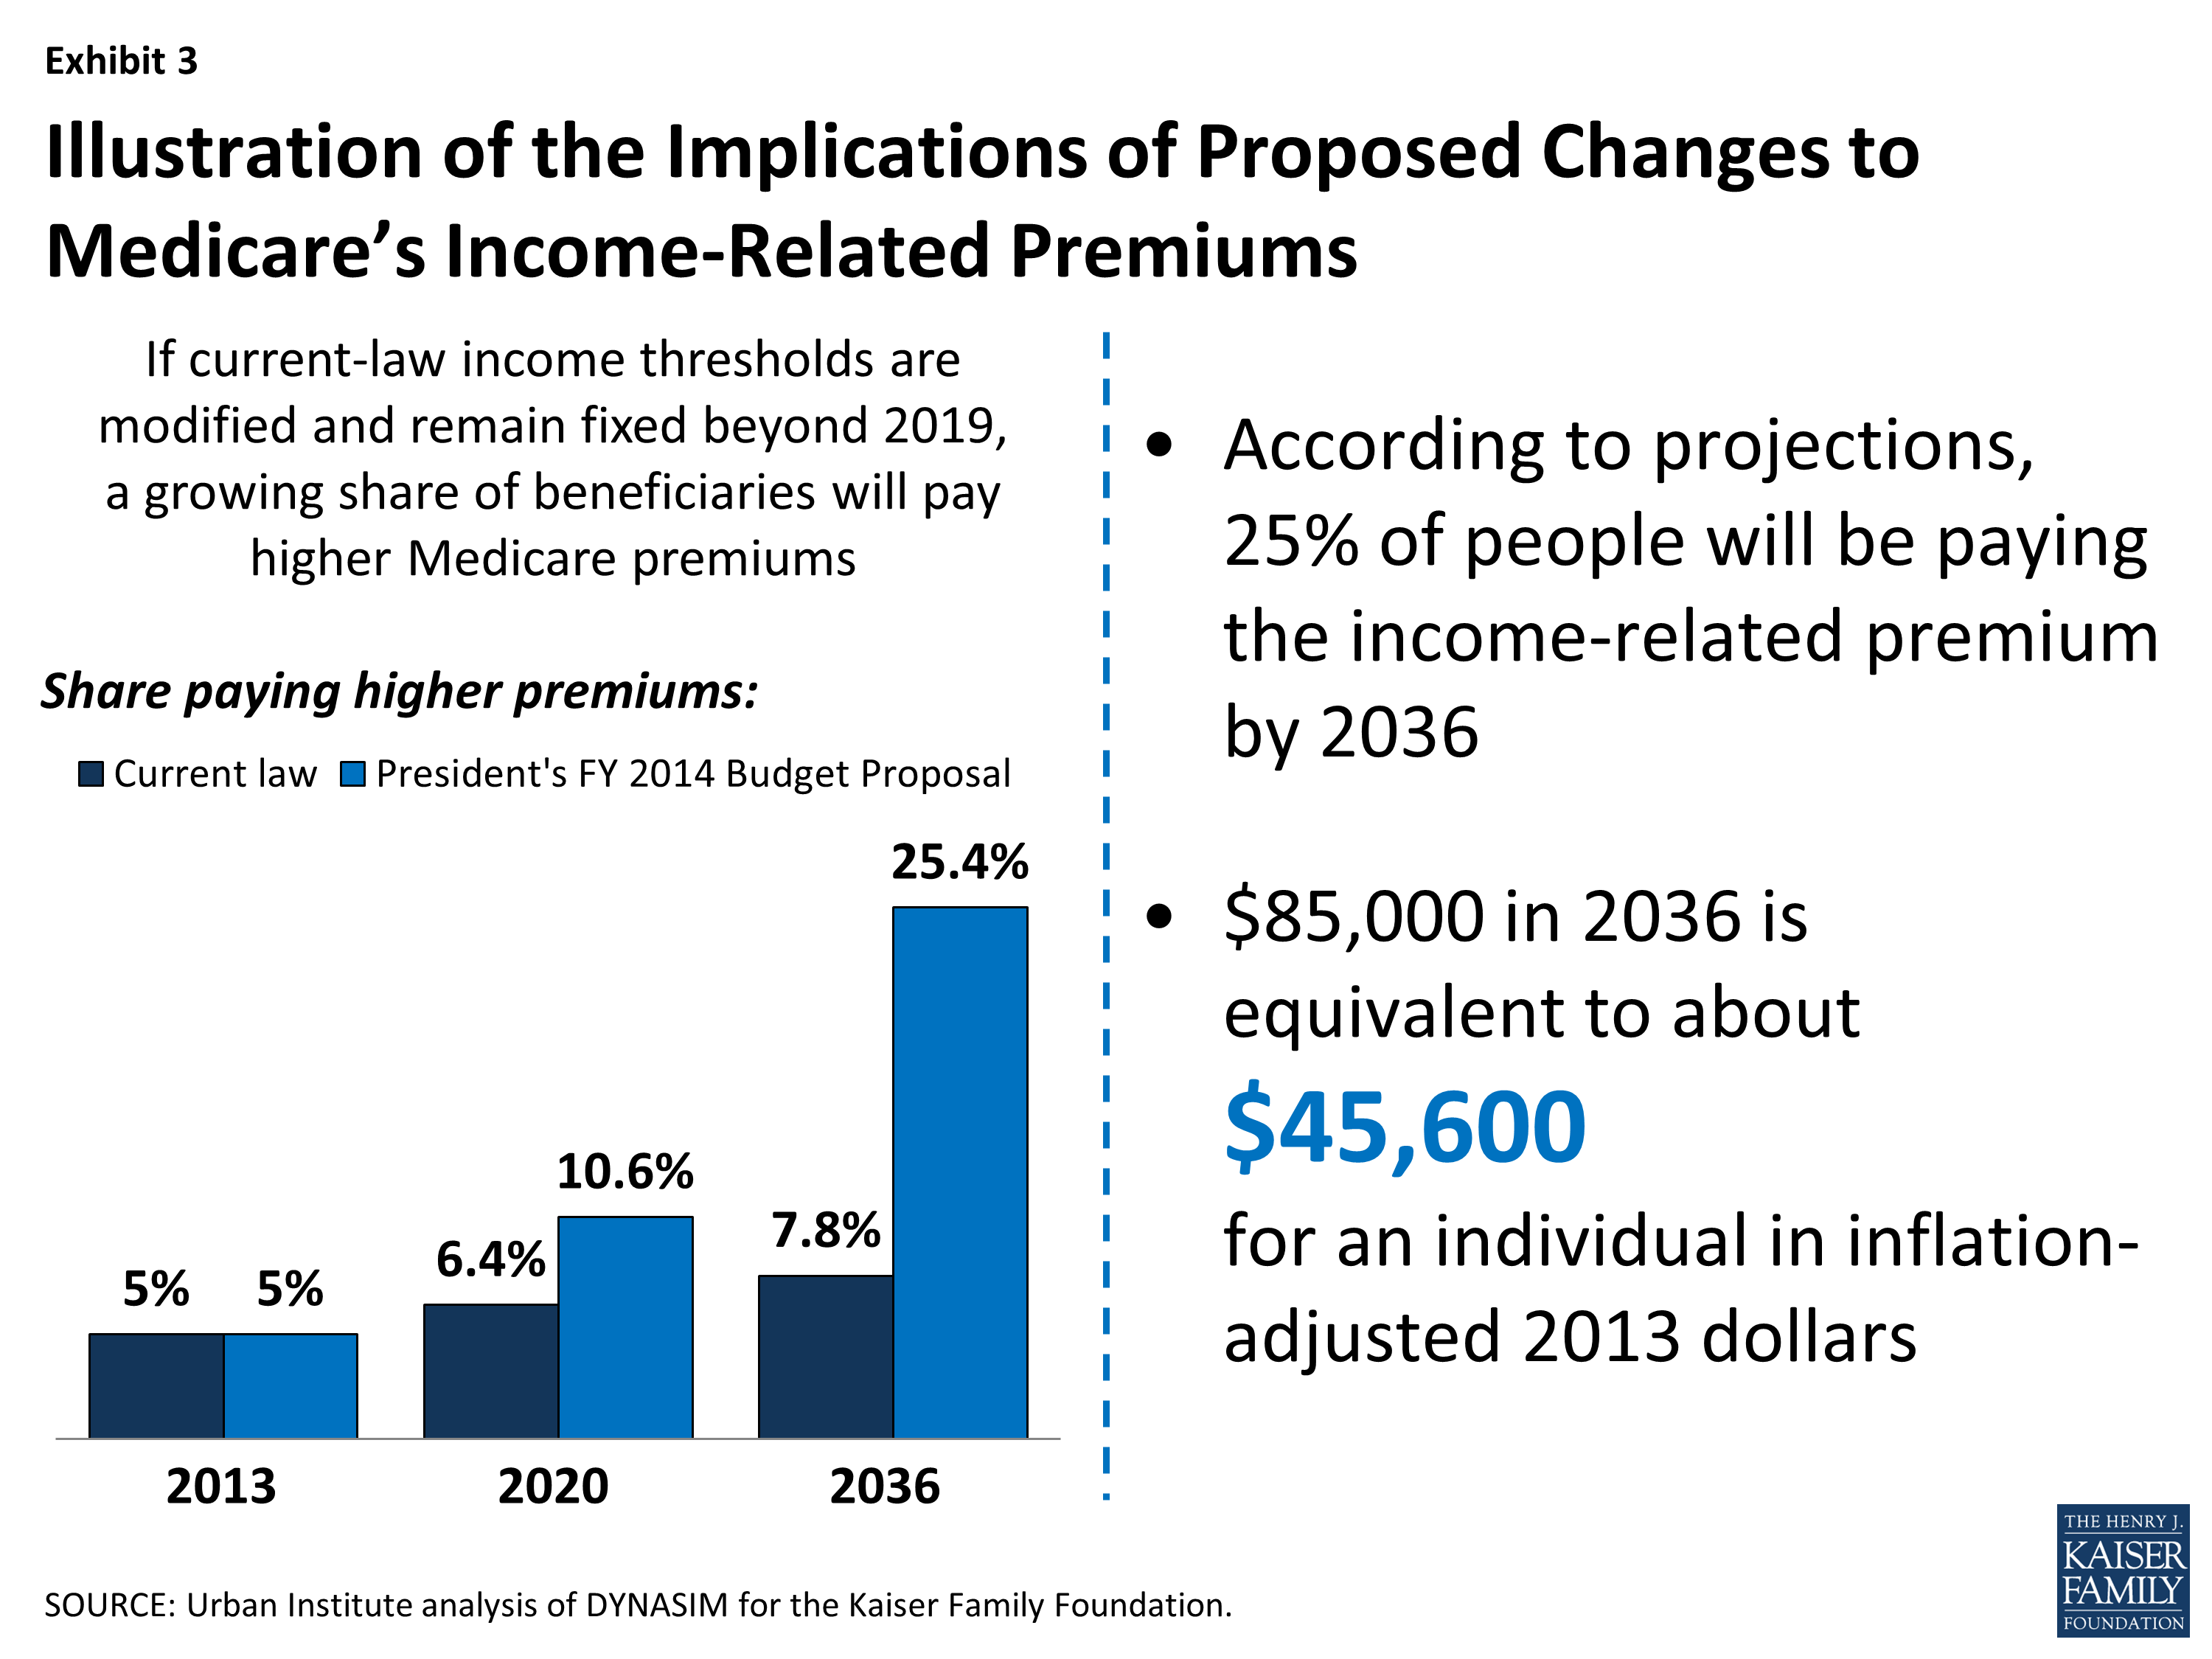 Raising Medicare Premiums for Higher